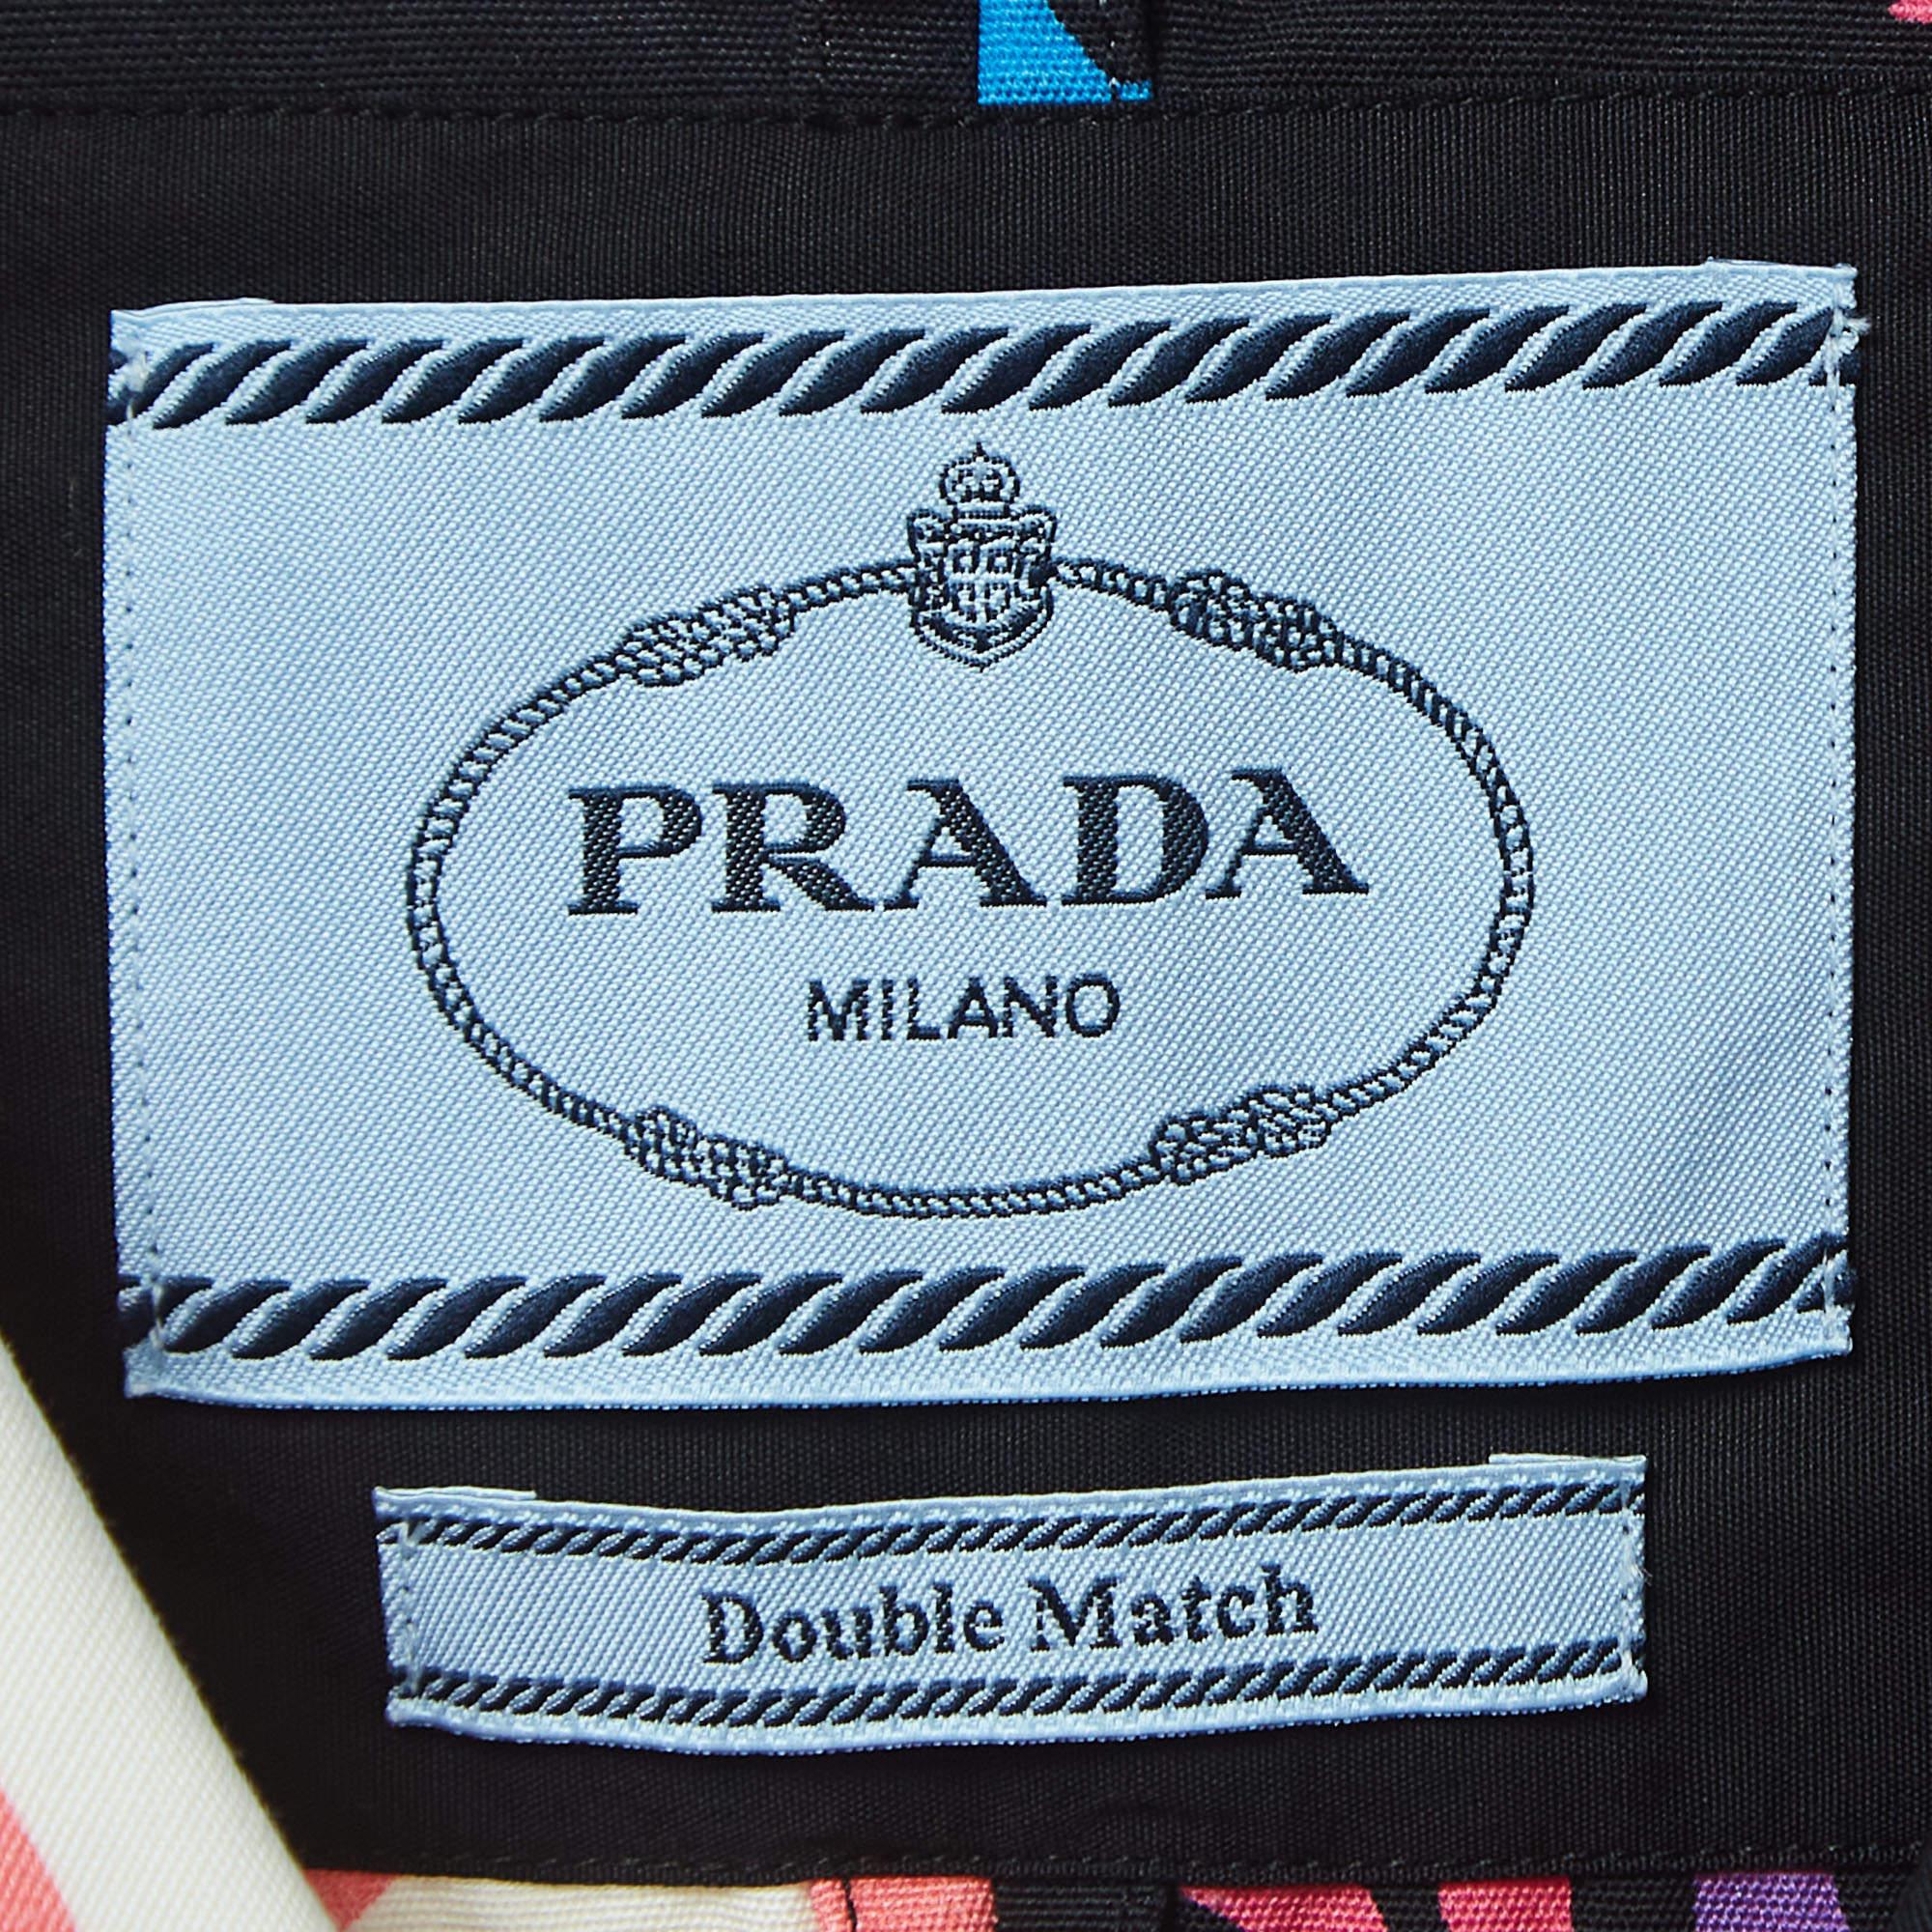 Prada Double Match Multicolor Printed Cotton Short Sleeve Shirt L For Sale 2